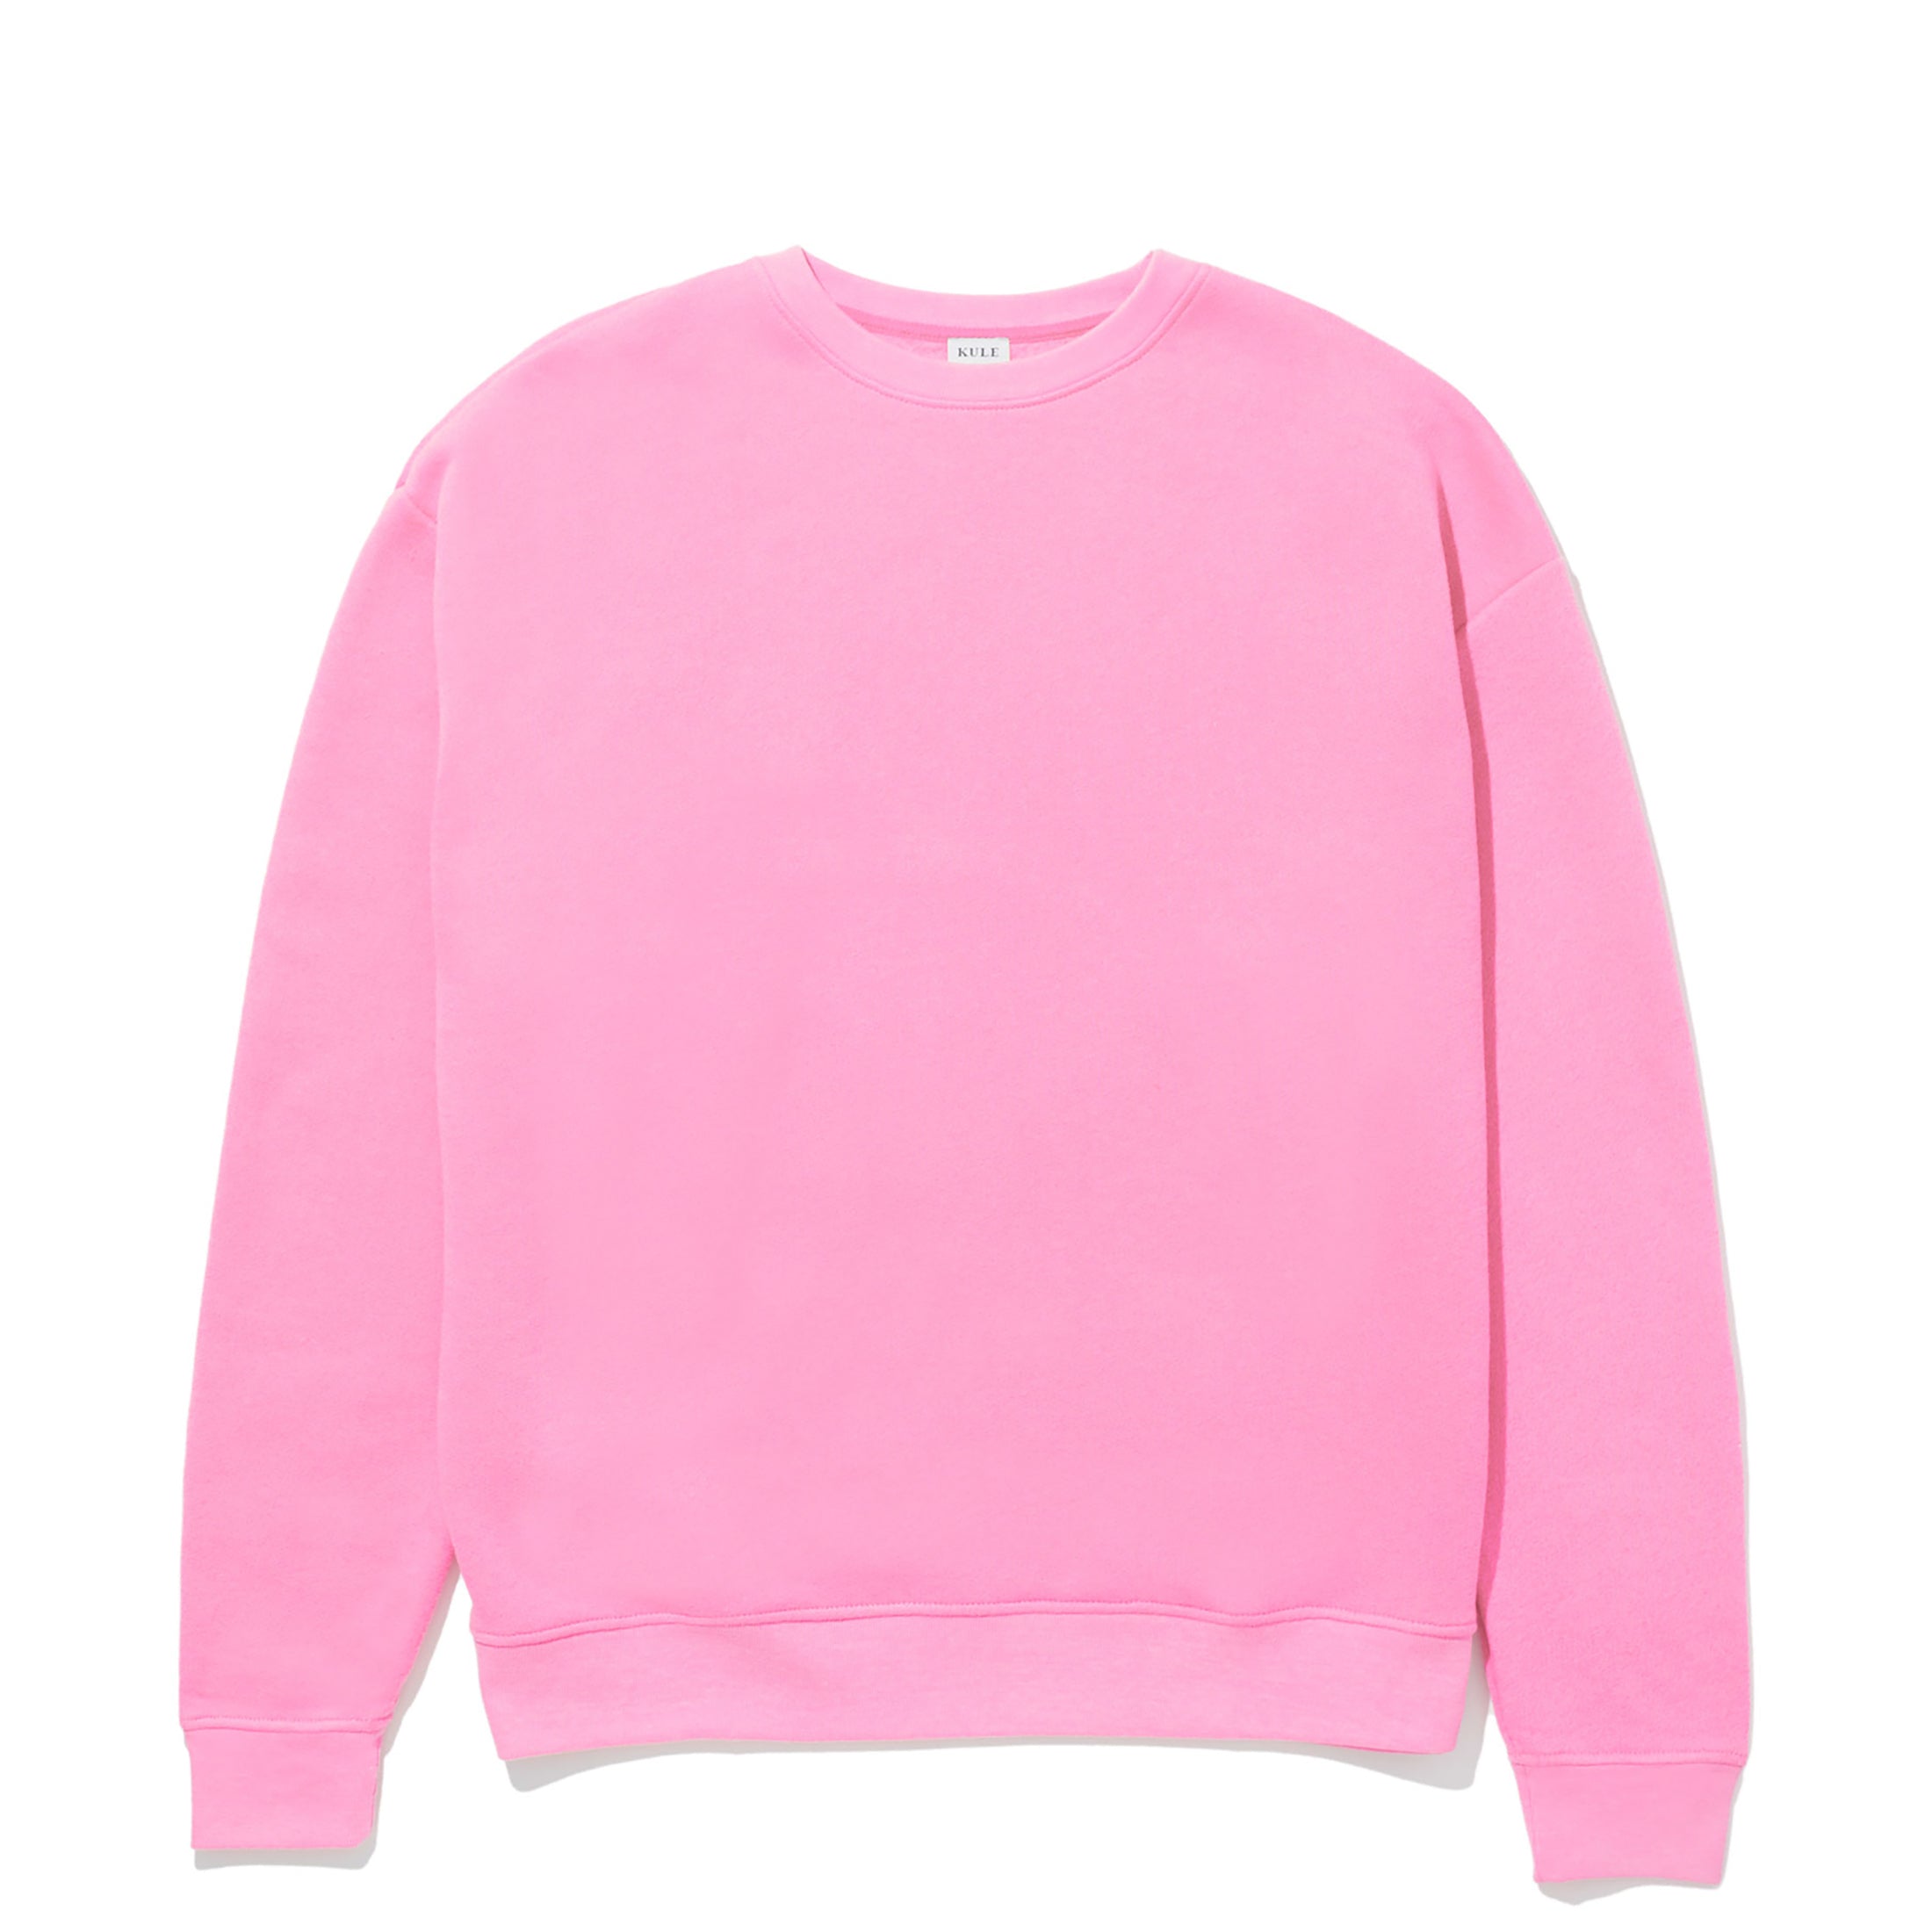 The Oversized Spongee Sweatshirt - Hot Pink